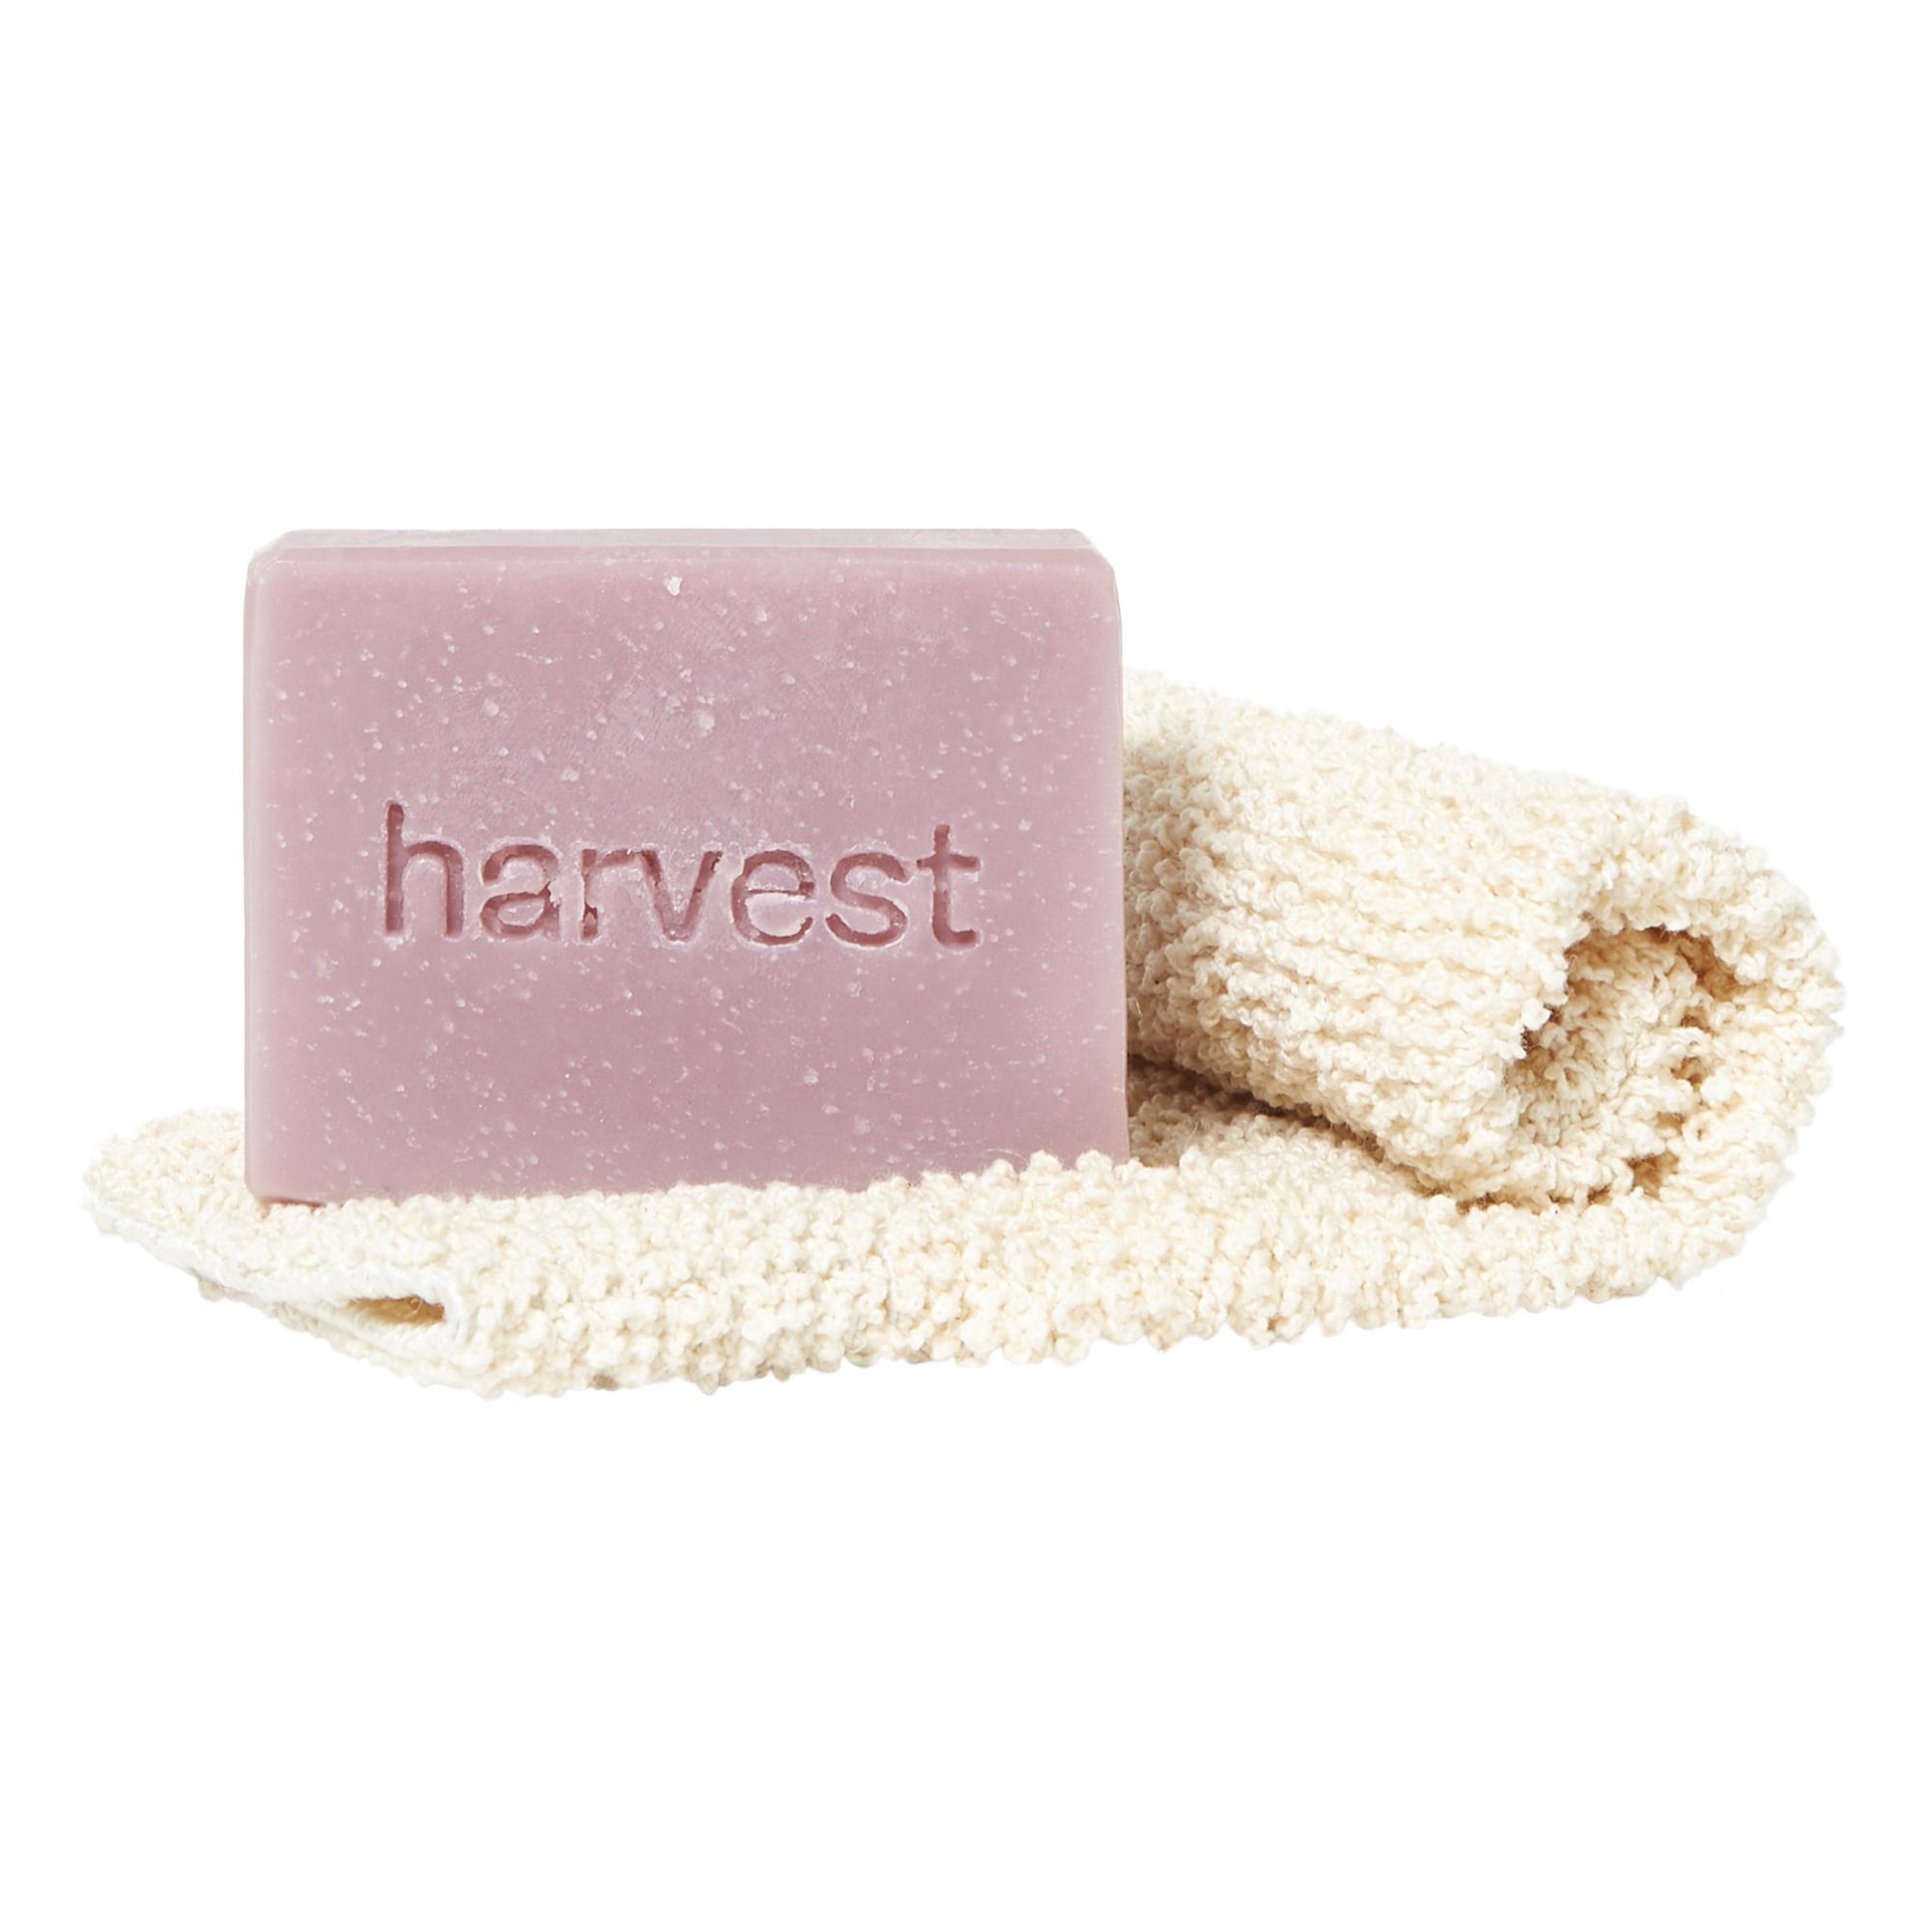 Harvest Skincare - Savon Camomile et racine d'Alkanet et gant exfoliant - 100 g - Rose